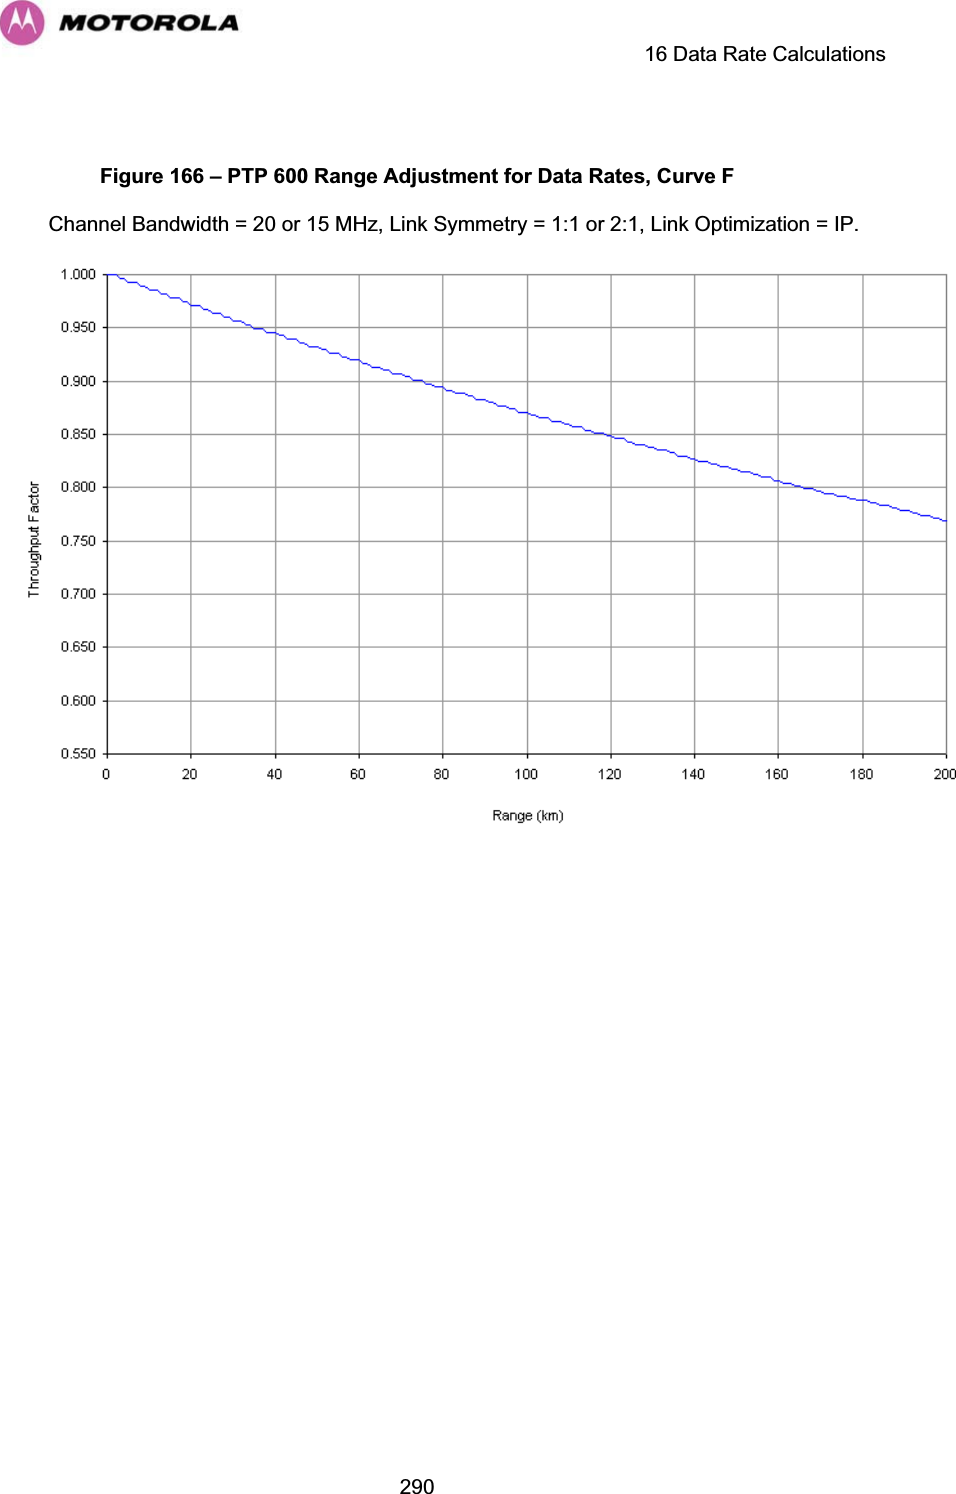     16 Data Rate Calculations  290 Figure 166 – PTP 600 Range Adjustment for Data Rates, Curve F Channel Bandwidth = 20 or 15 MHz, Link Symmetry = 1:1 or 2:1, Link Optimization = IP.  